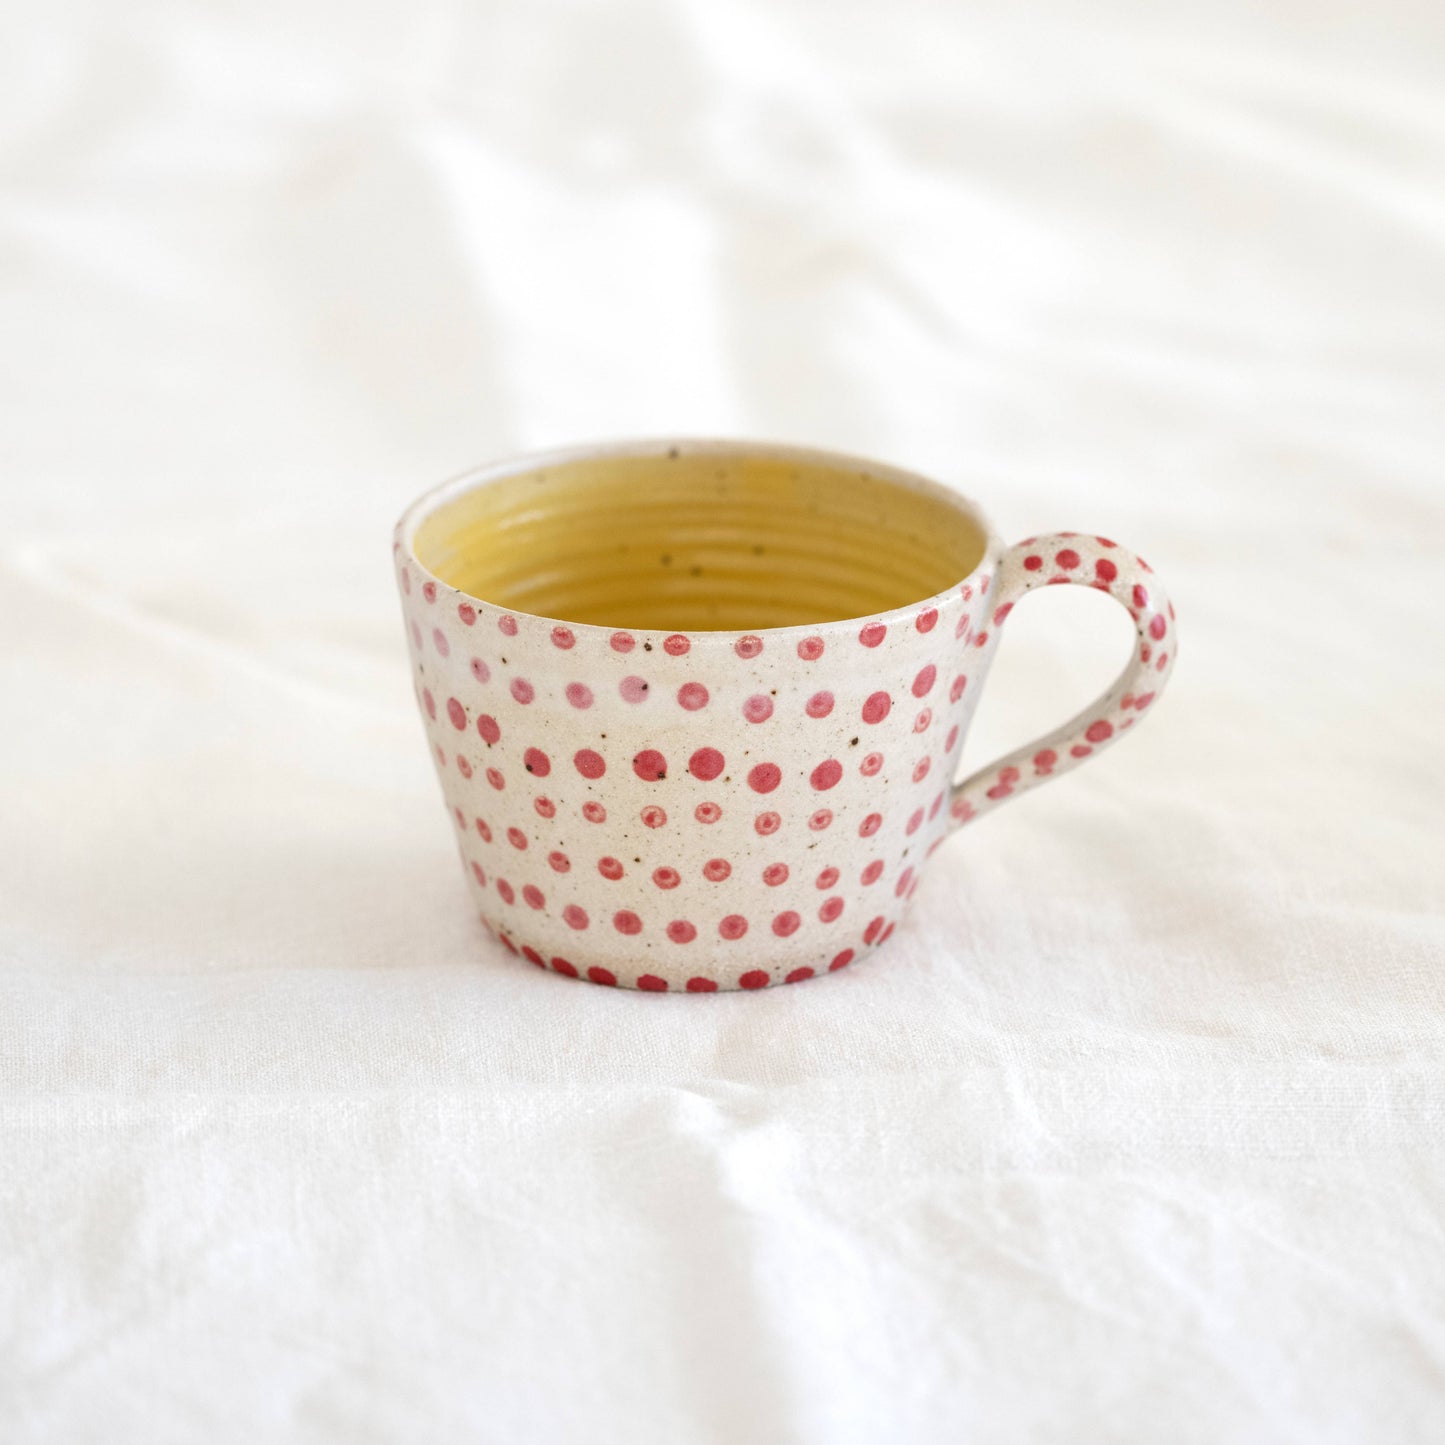 Coffee mug with red polka dots yellow glaze